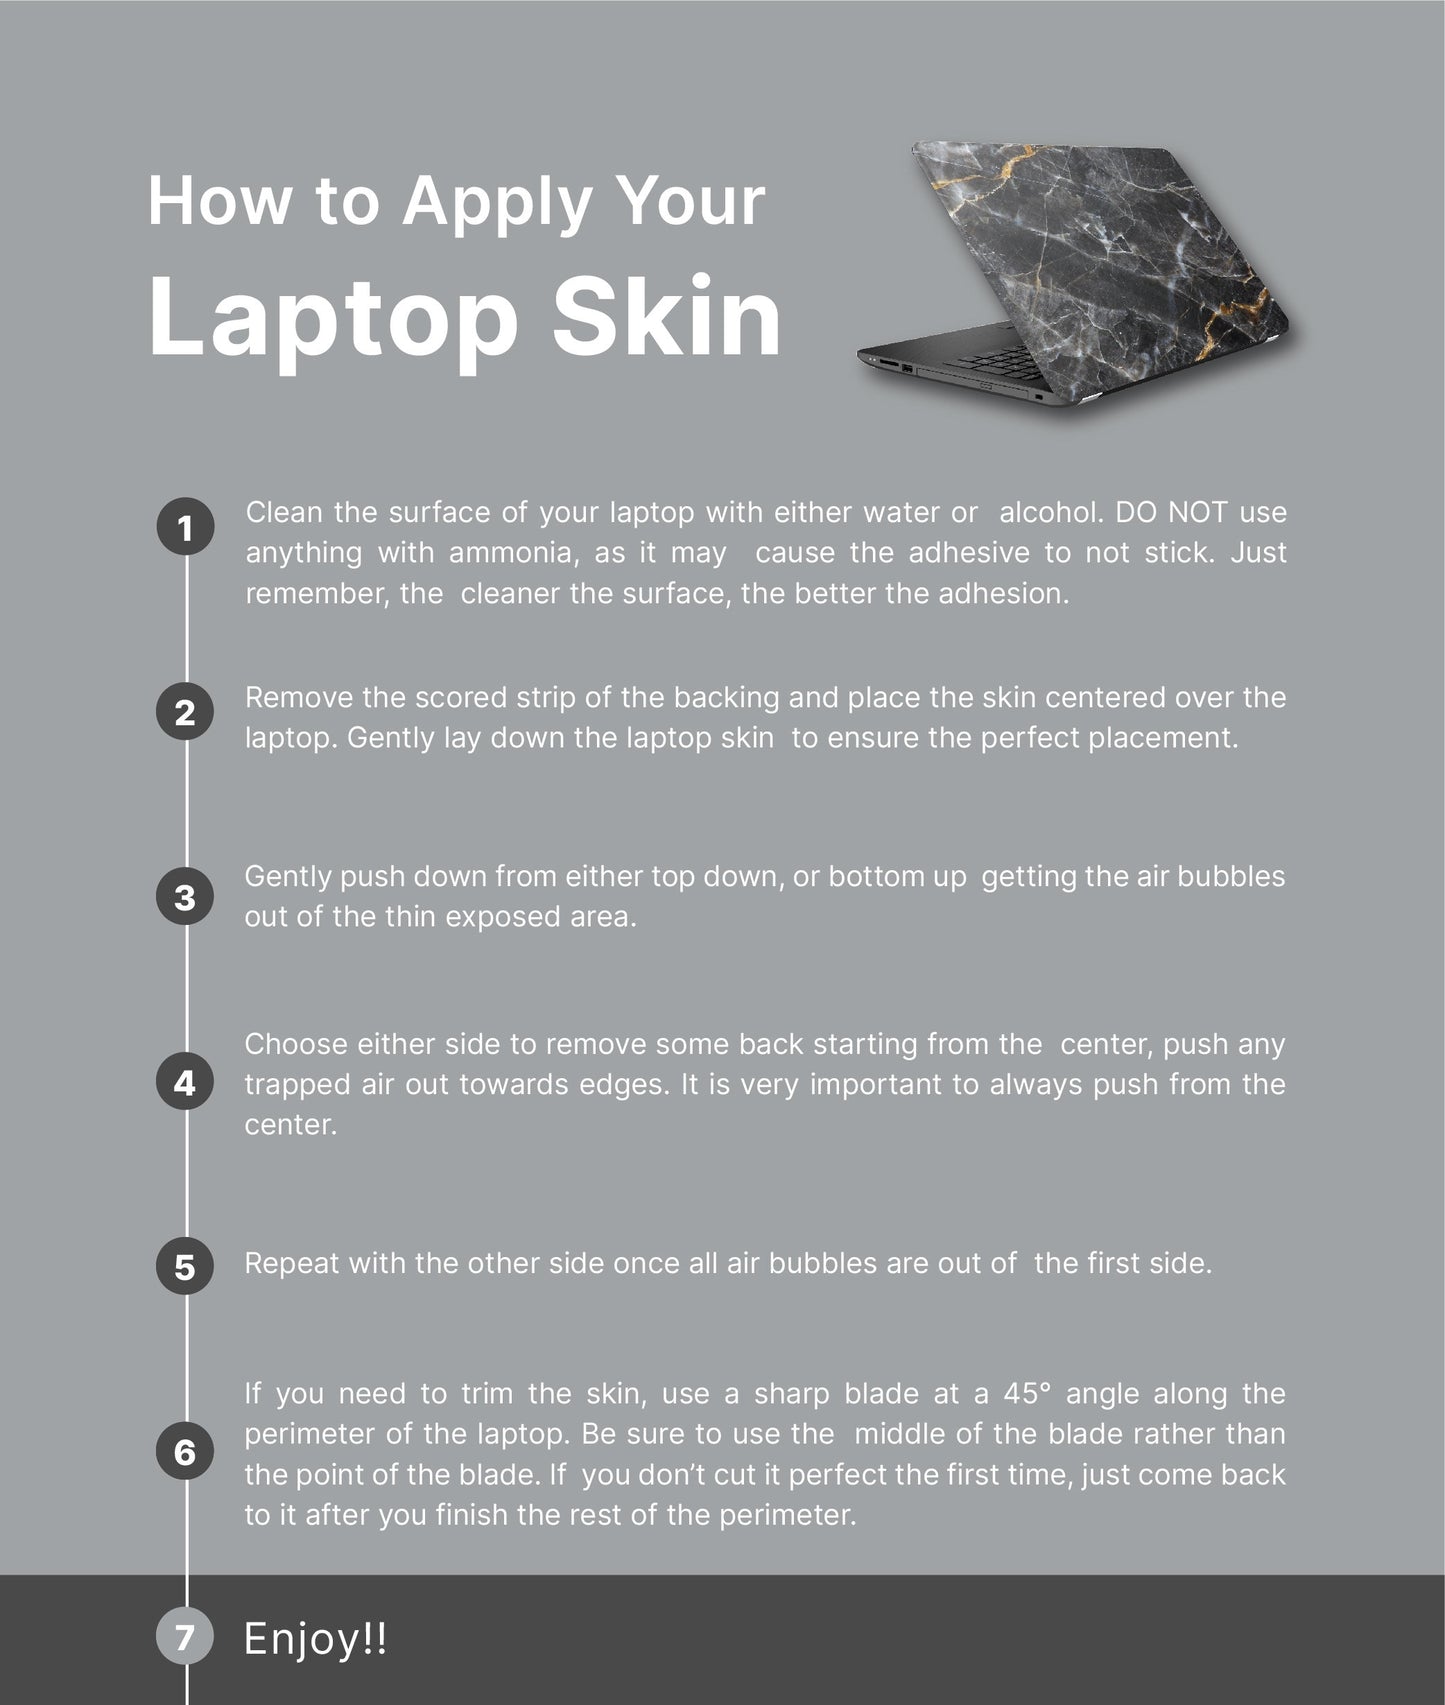 Solar System Moon Laptop Skin, Laptop Cover, Laptop Skins, Removable Laptop Skins, Laptop Decal, Customized Laptop Skin, Laptop Stickers 354